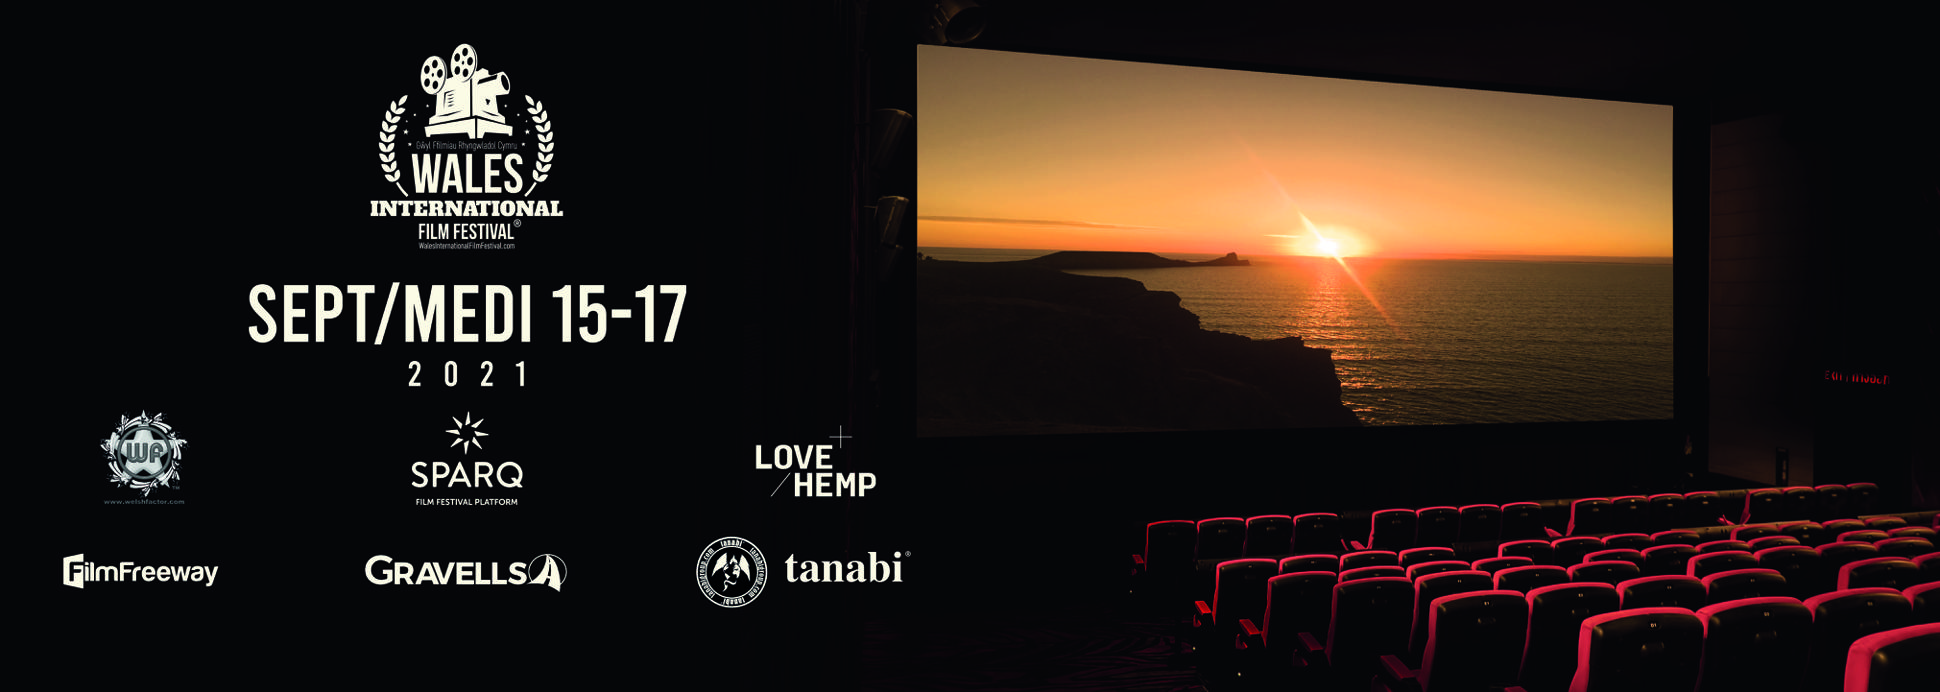 Wales International Film Festival 2021